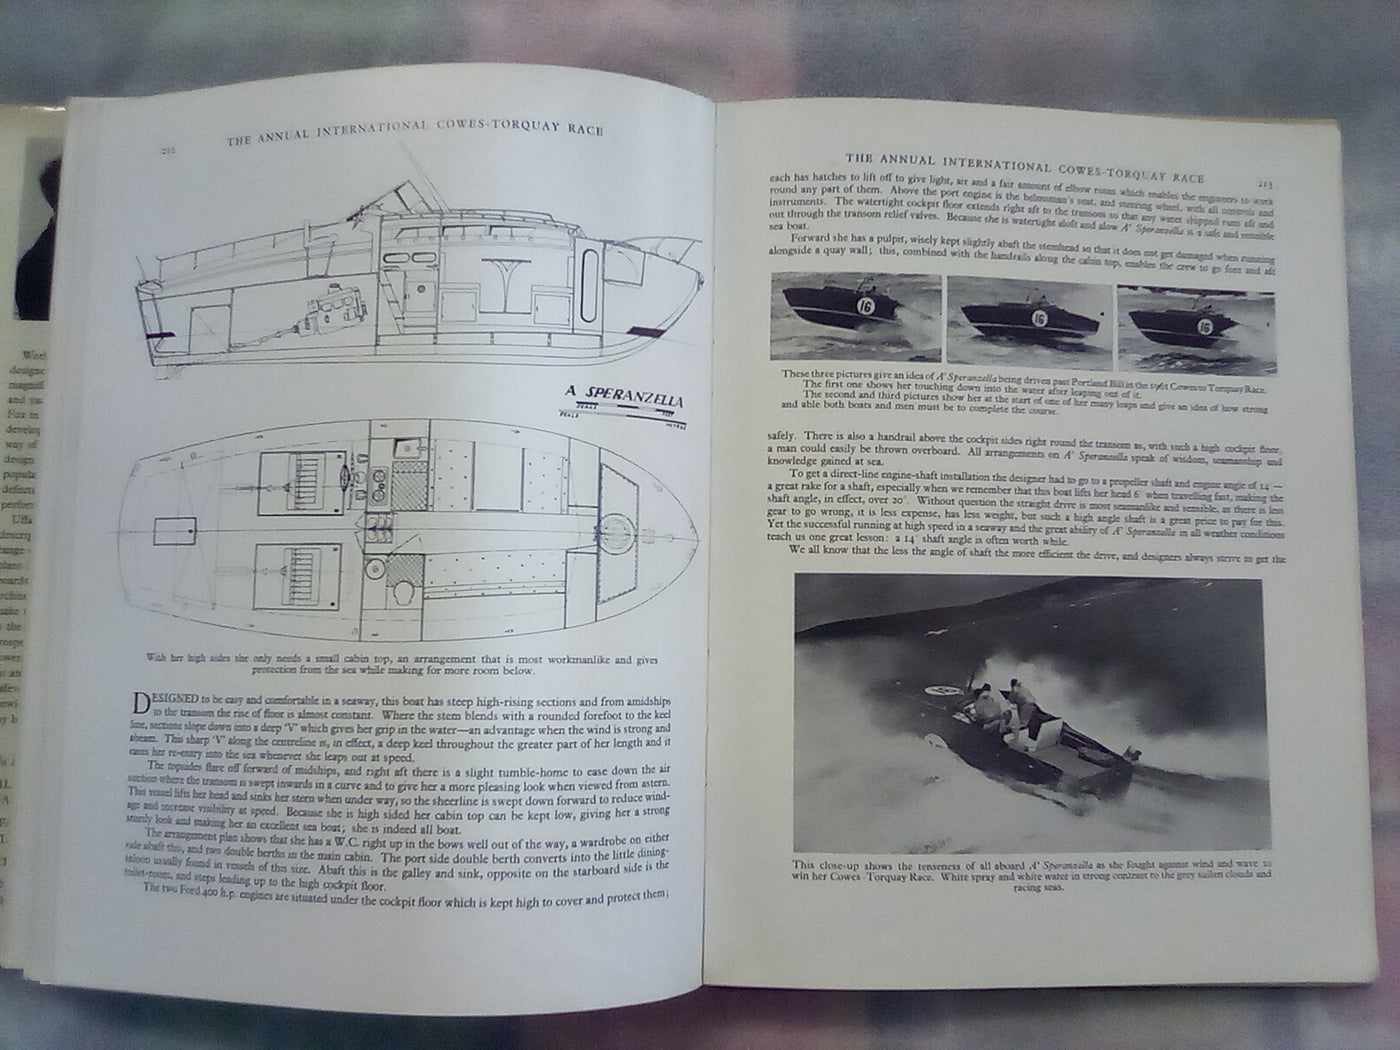 Seamanlike Sense in Powercraft (Powerboat Design & Evolution) by Uffa Fox